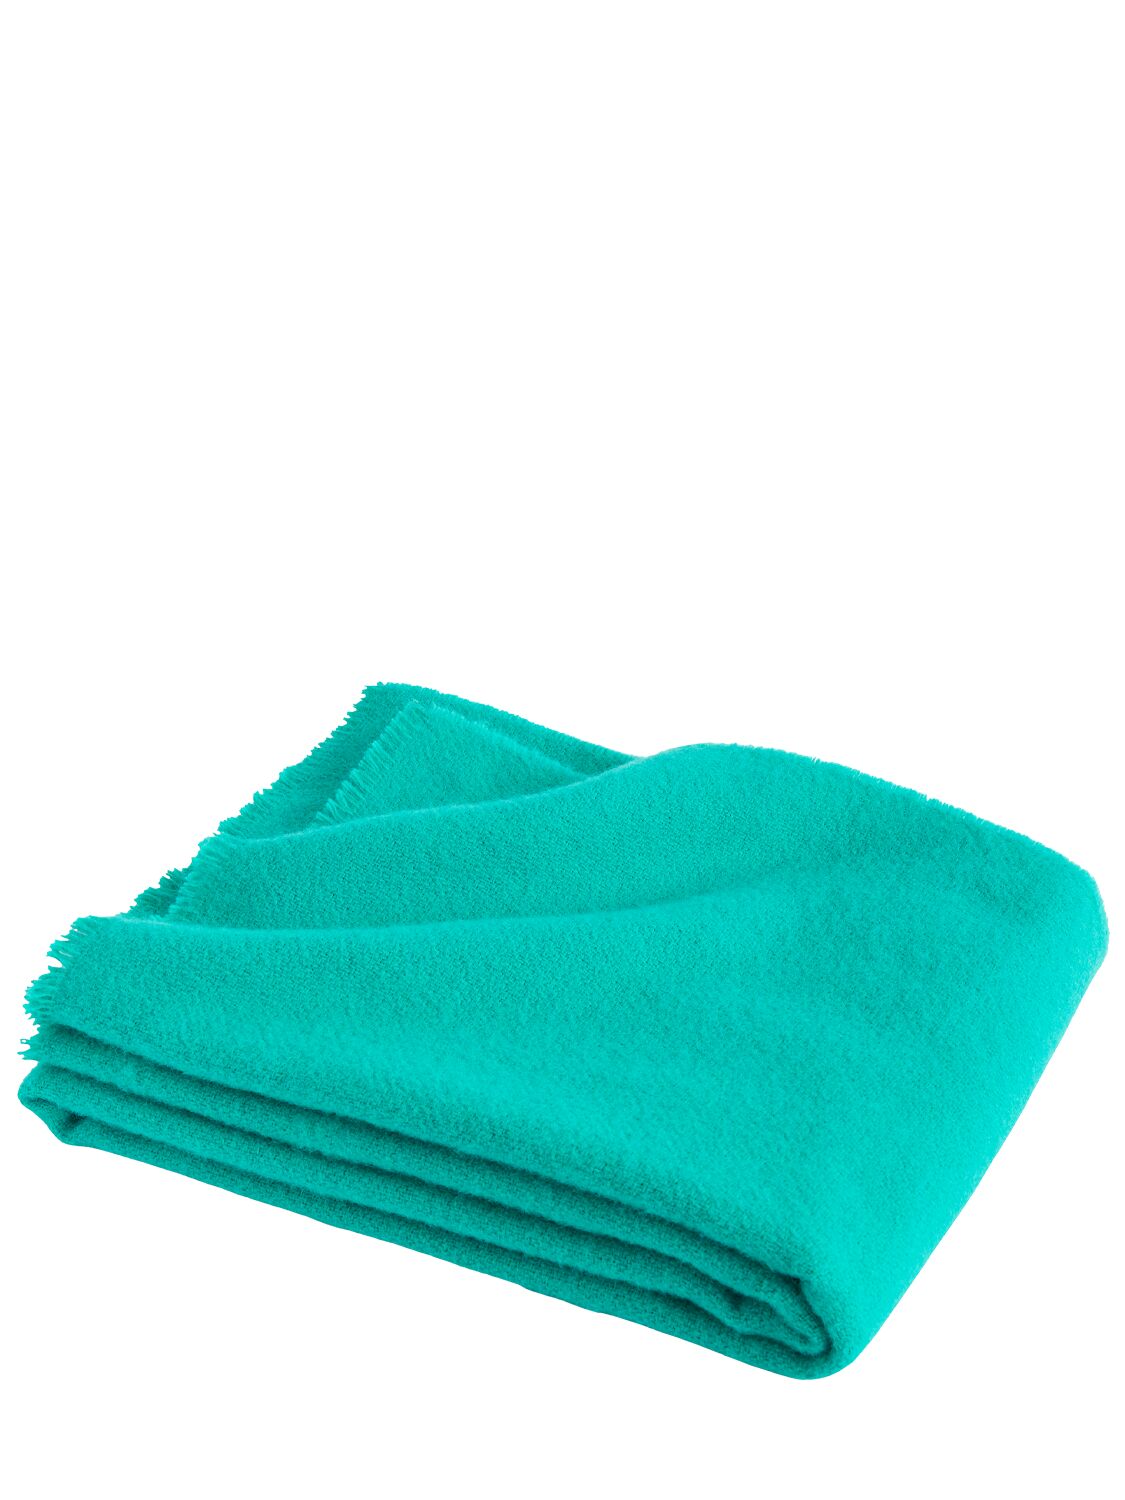 Aqua Green Mono Blanket - HAY - Modalova